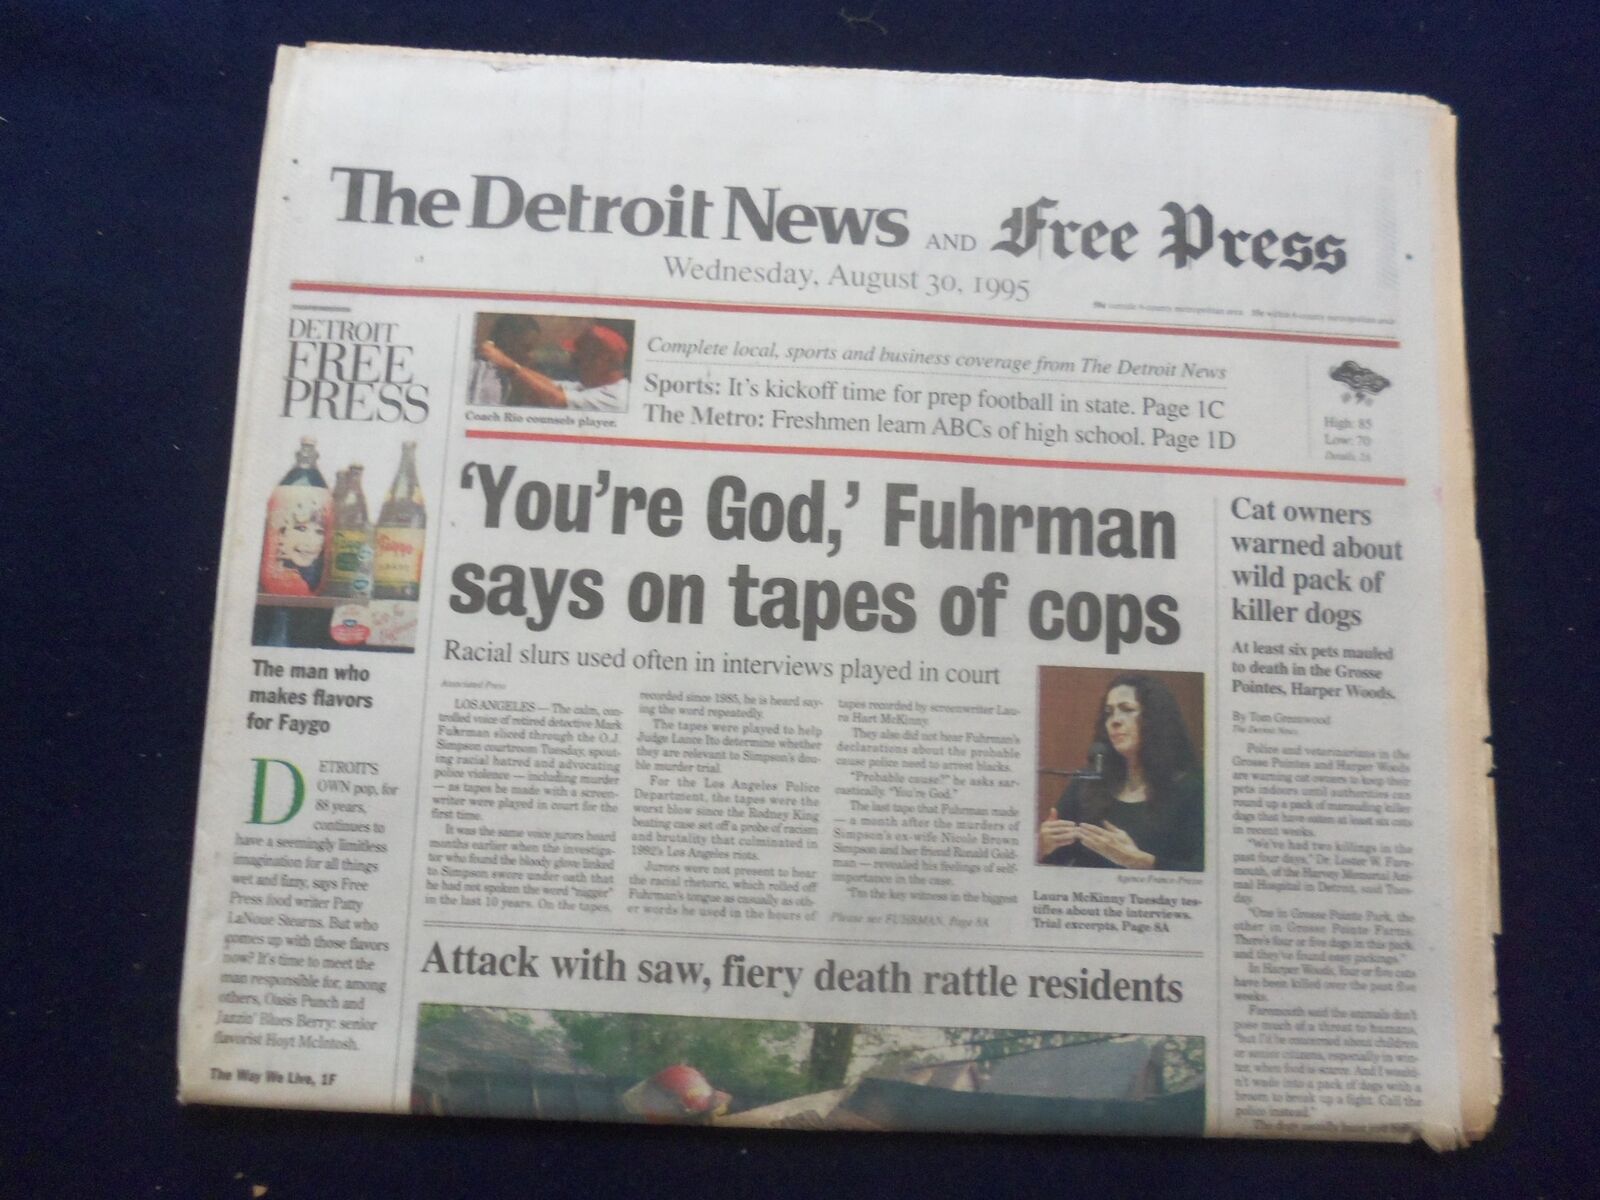 1995 AUG 30 DETROIT NEWS/FREE PRESS NEWSPAPER-MARK FUHRMAN 'YOU'RE GOD'- NP 7209